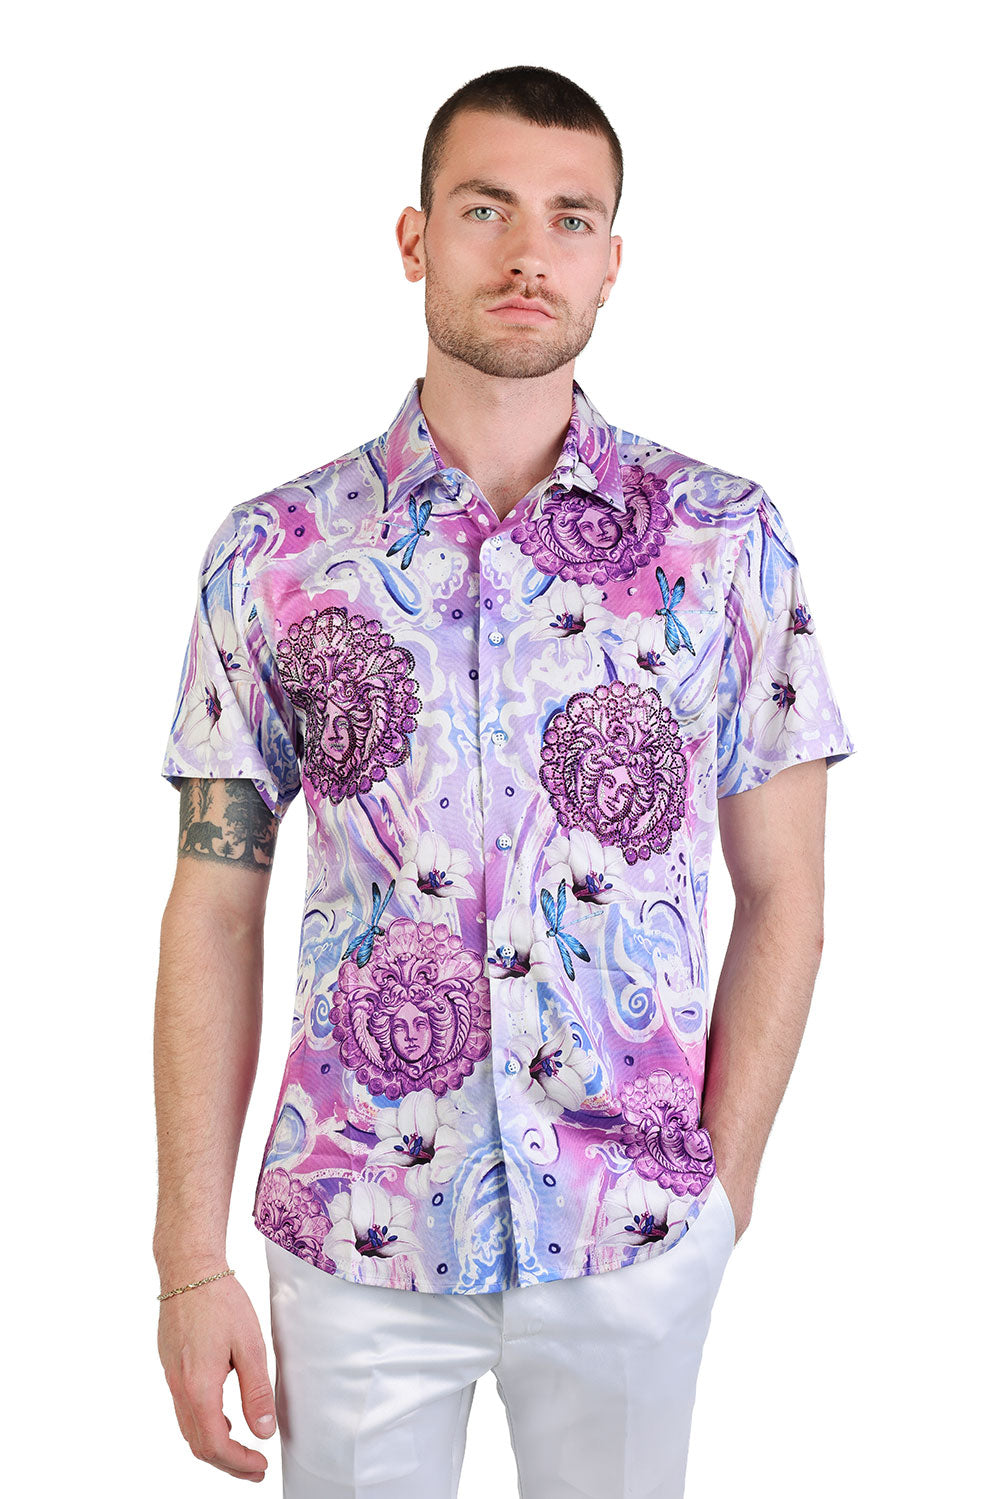 BARABAS Men's medusa paisley rhinestones graphic short sleeve shirt SSR19 lavender